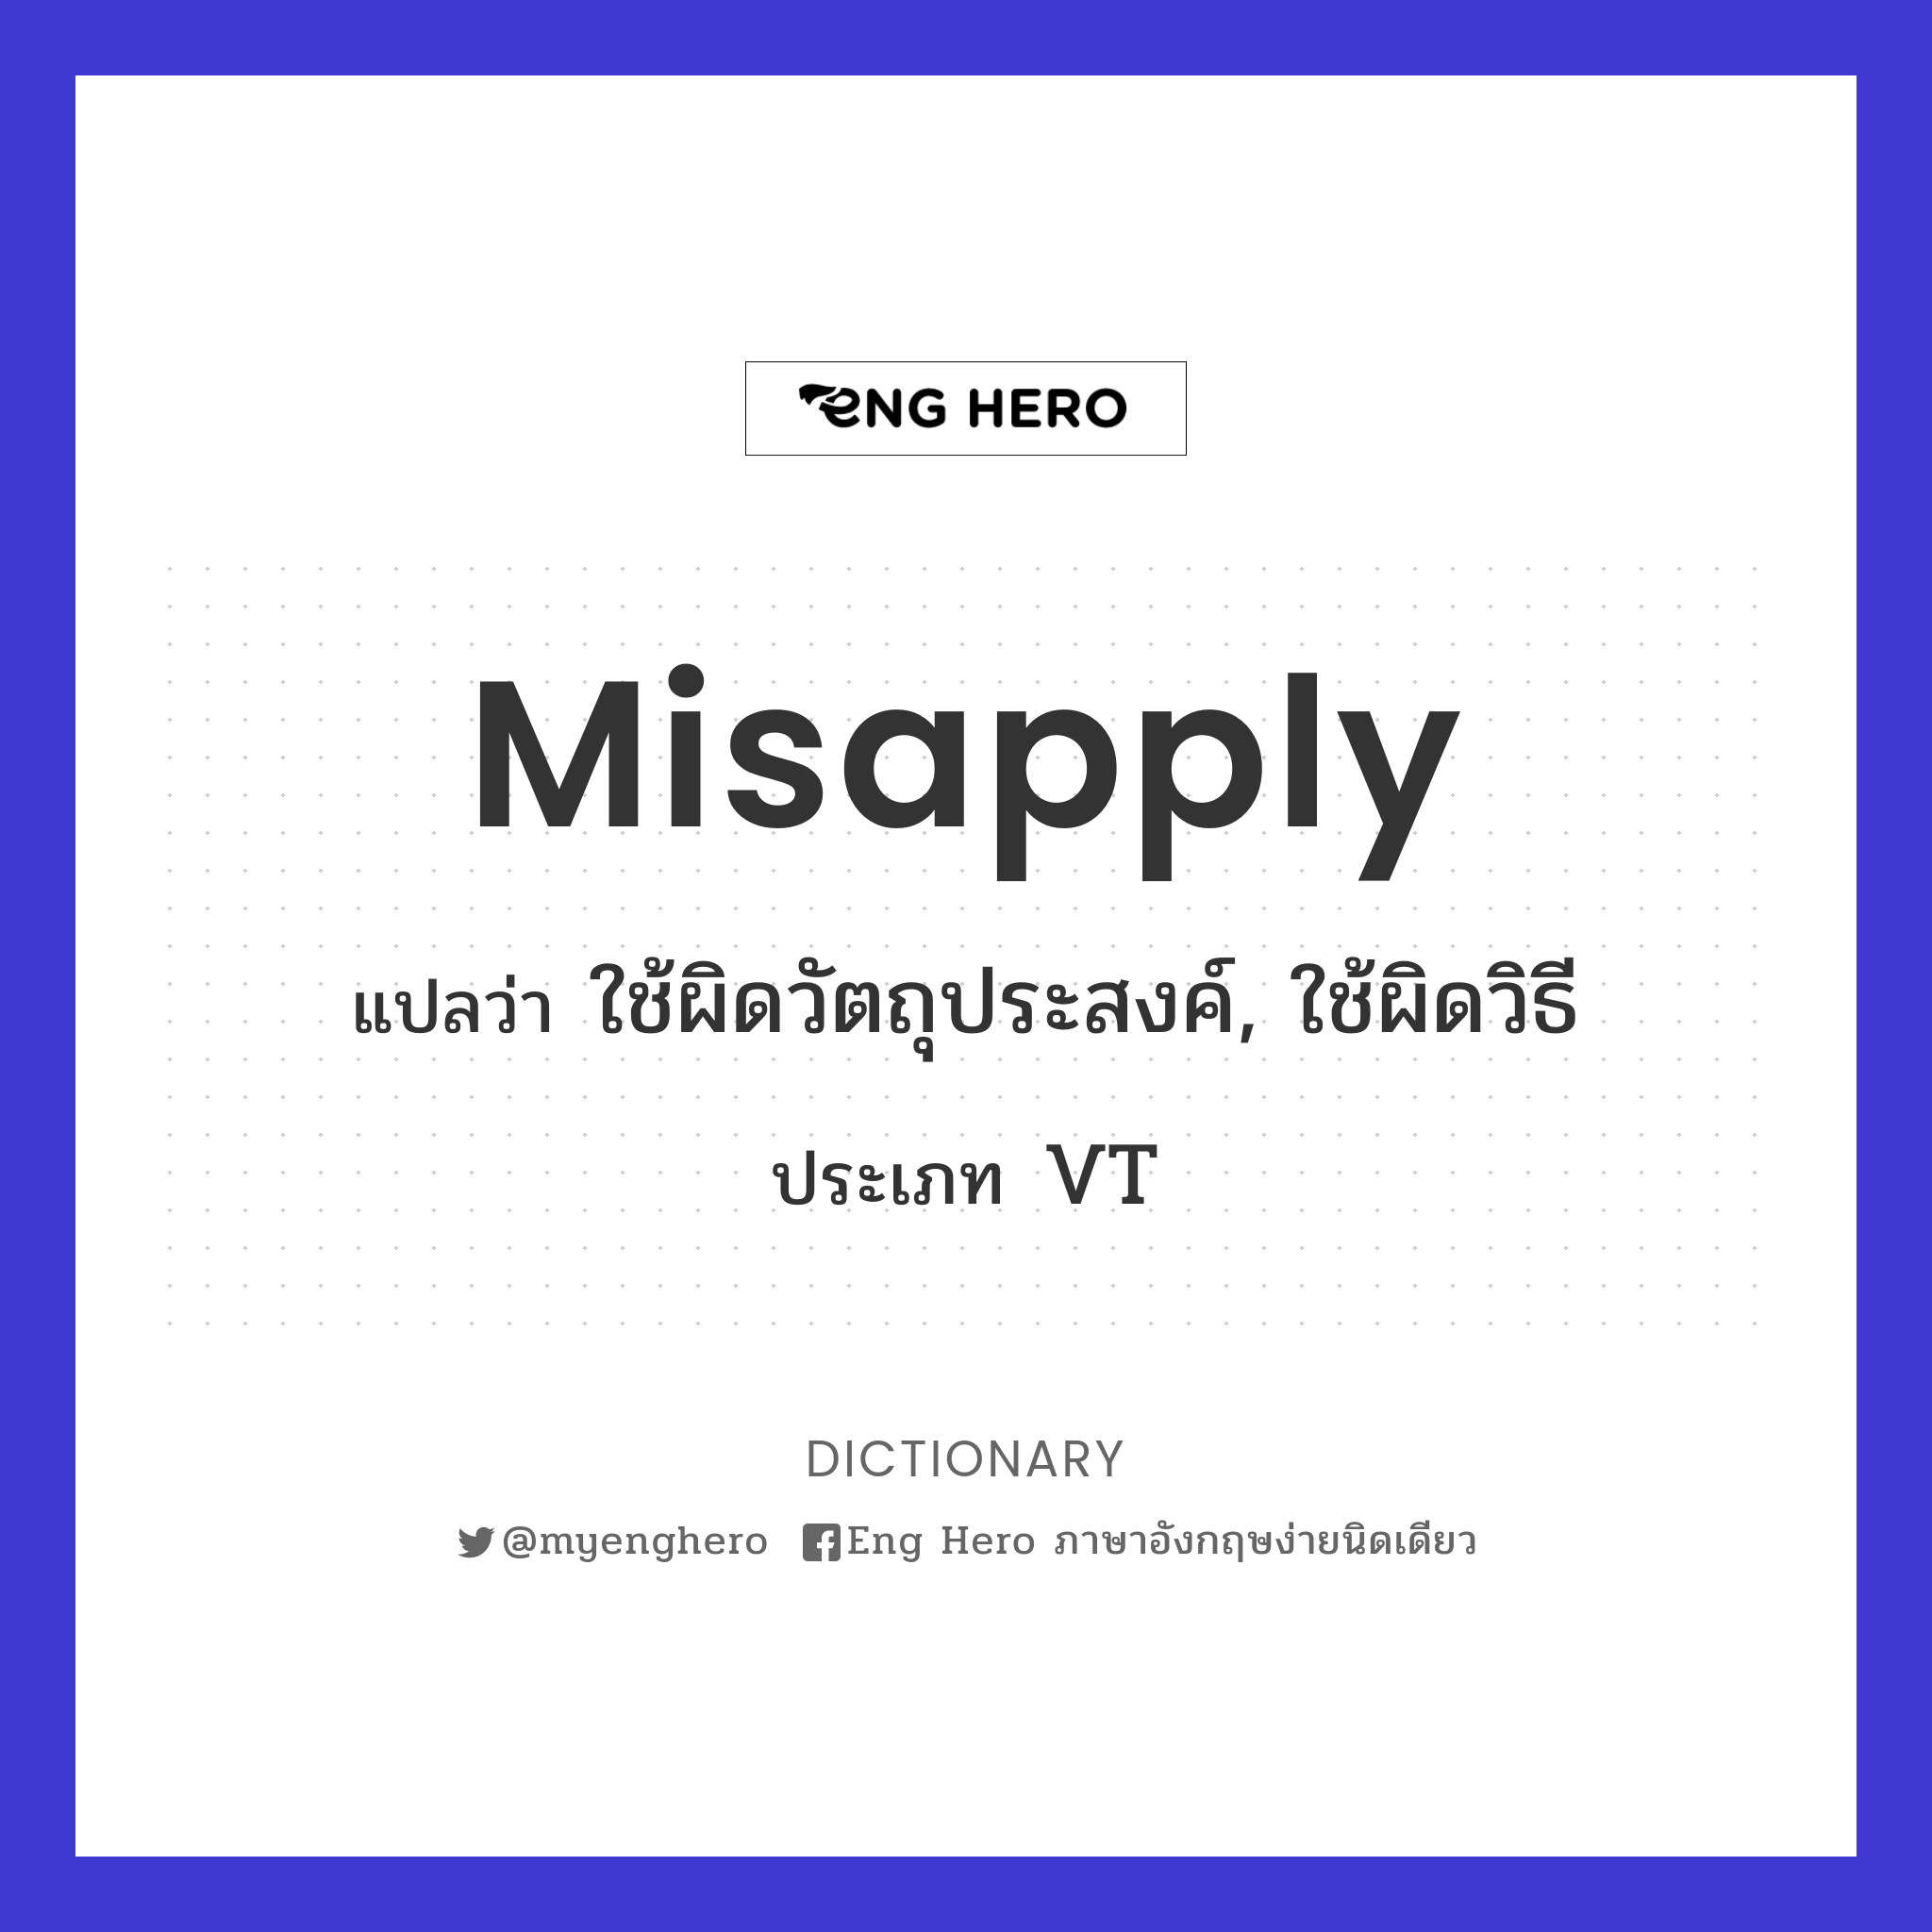 misapply